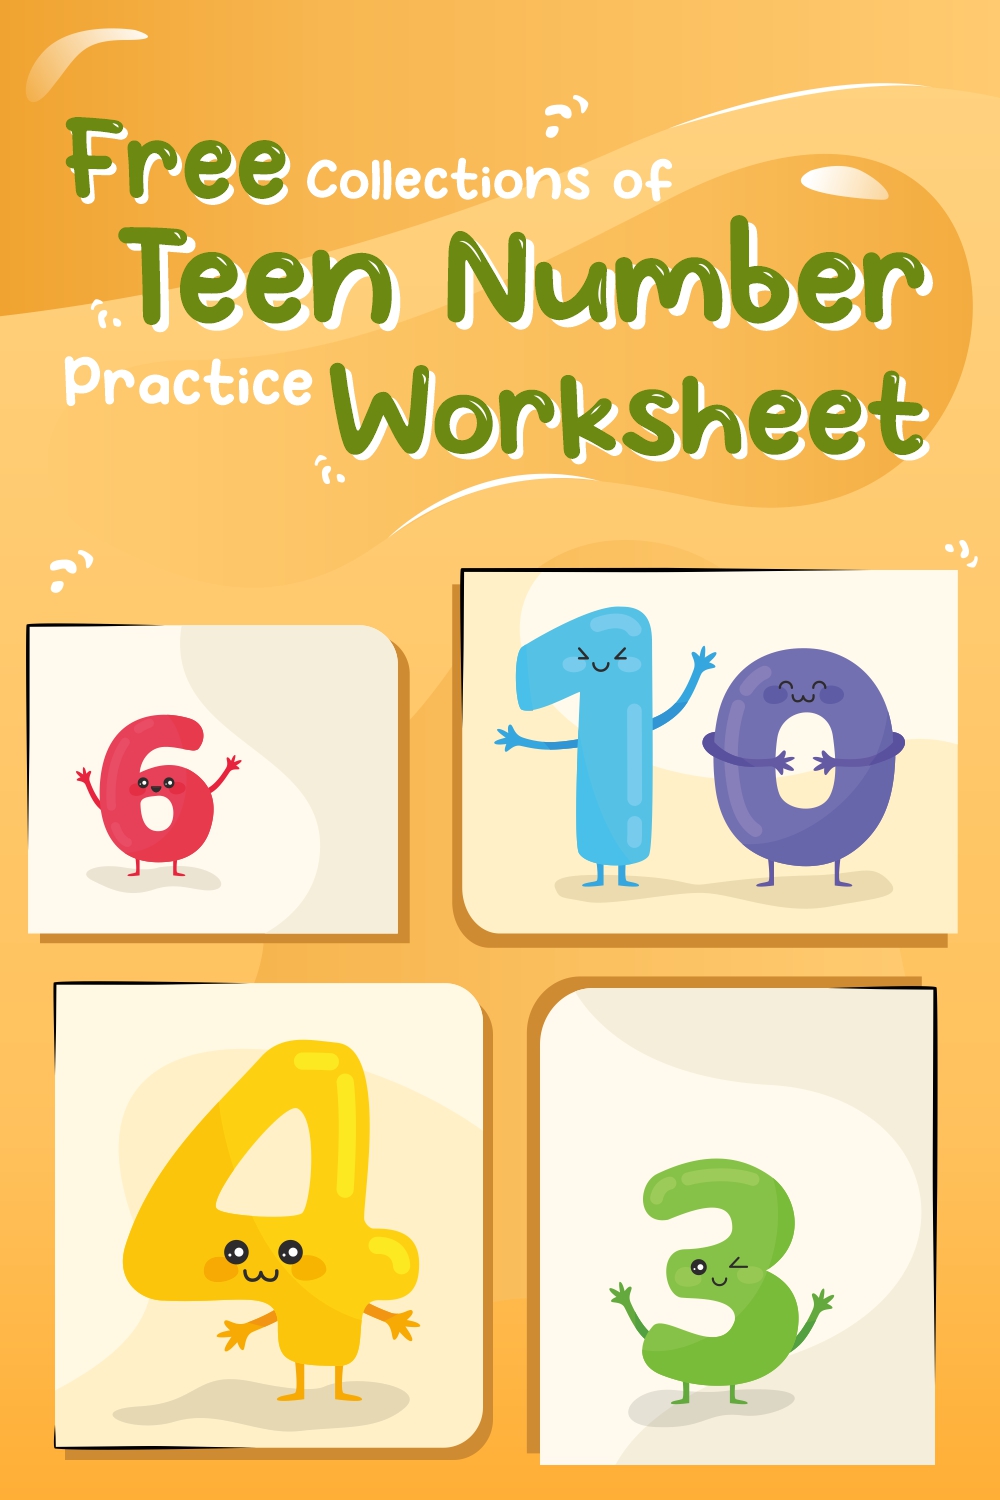 Teen Number Practice Worksheet